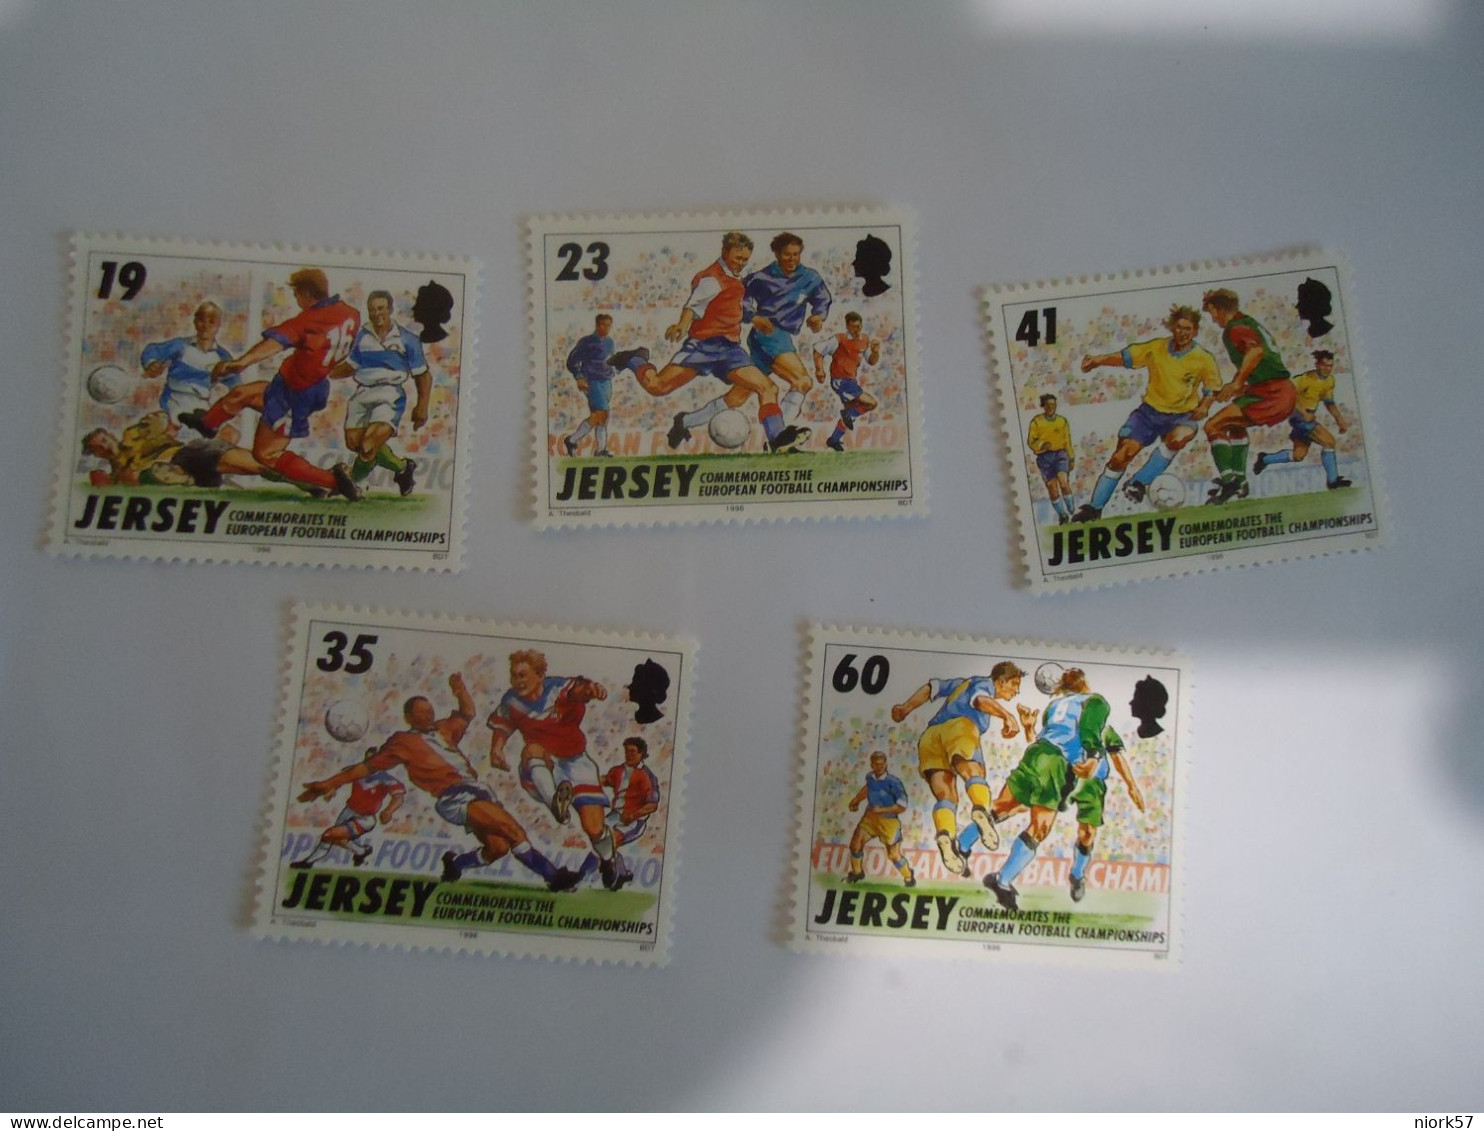 JERSEY MNH  5  STAMPS FOOTBALL CHAMPIONSHIP  1986 - Europei Di Calcio (UEFA)